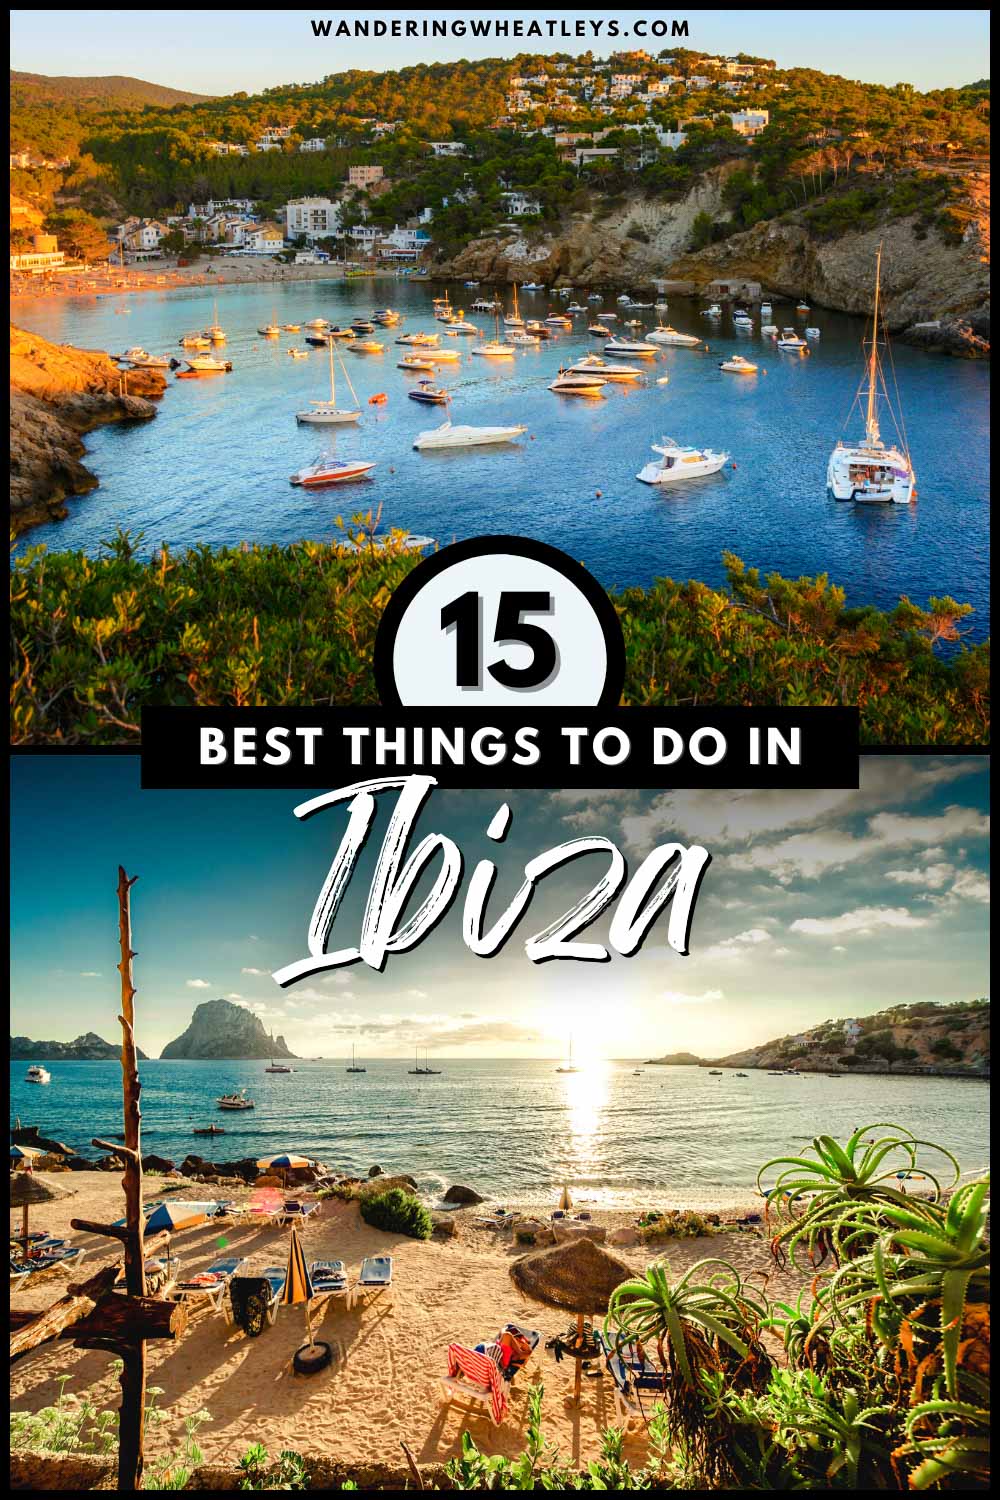 59 Fun & Unusual Things to Do in Ibiza - TourScanner